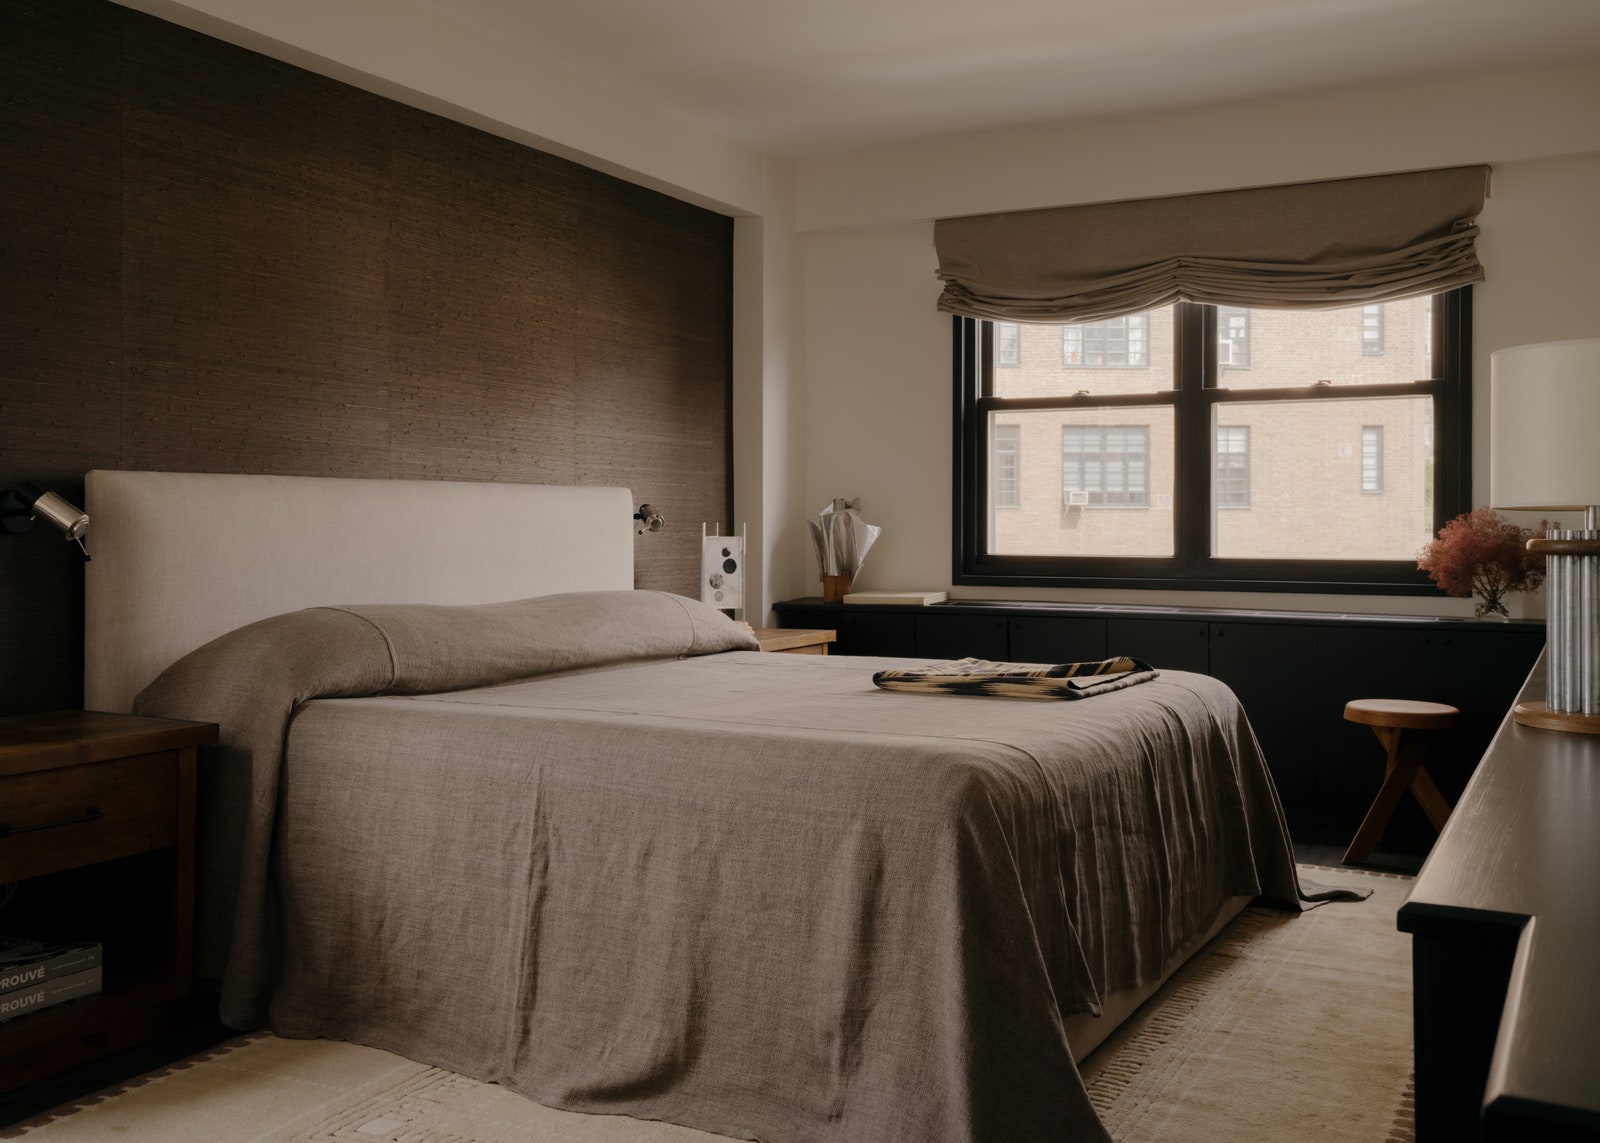 A muddy graytoned bedcover softens a monochrome bedroom in West Village home transformed by designer Sebastian Zuchowicki.